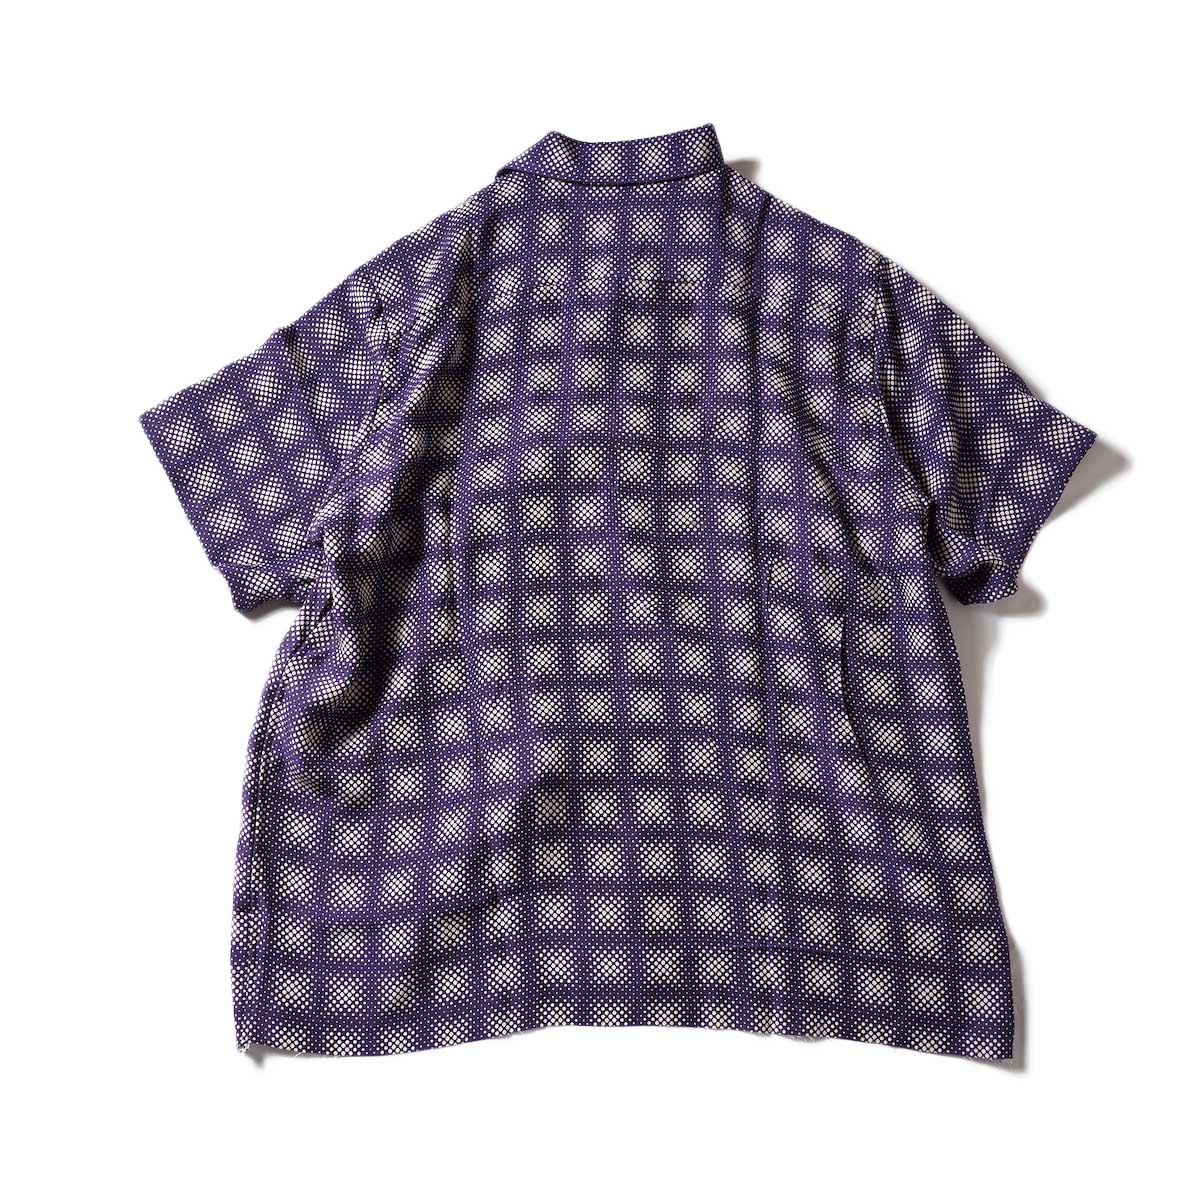 Needles / C.O.B. S/S Classic Shirt - Jacqard (Dot Ombre)背面